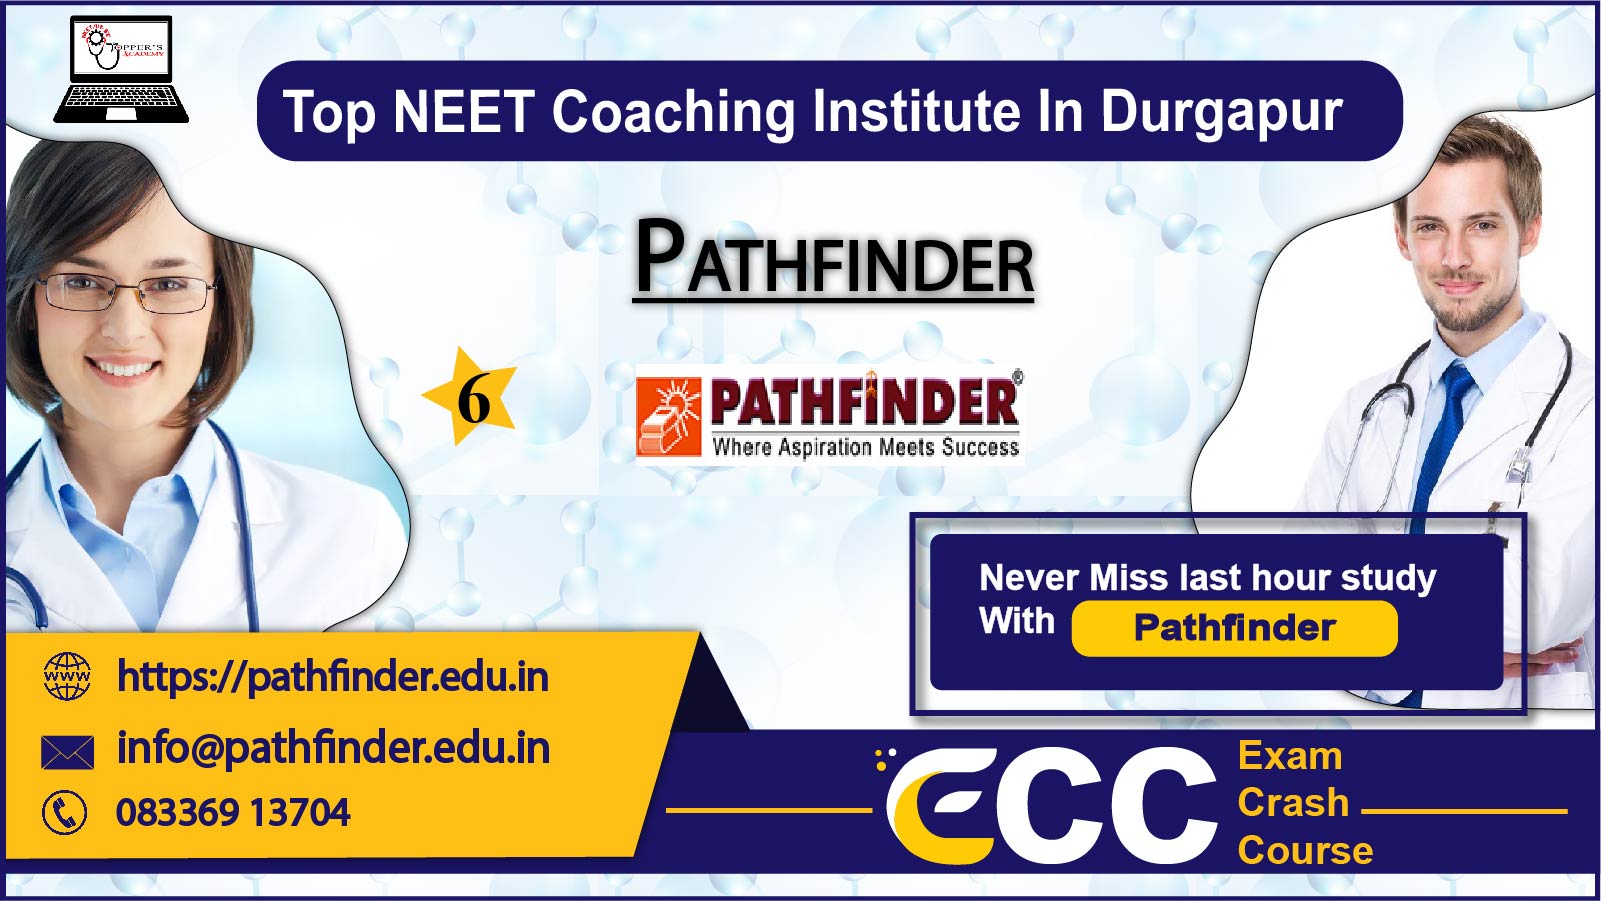 Pathfinder NEET Coaching in Durgapur